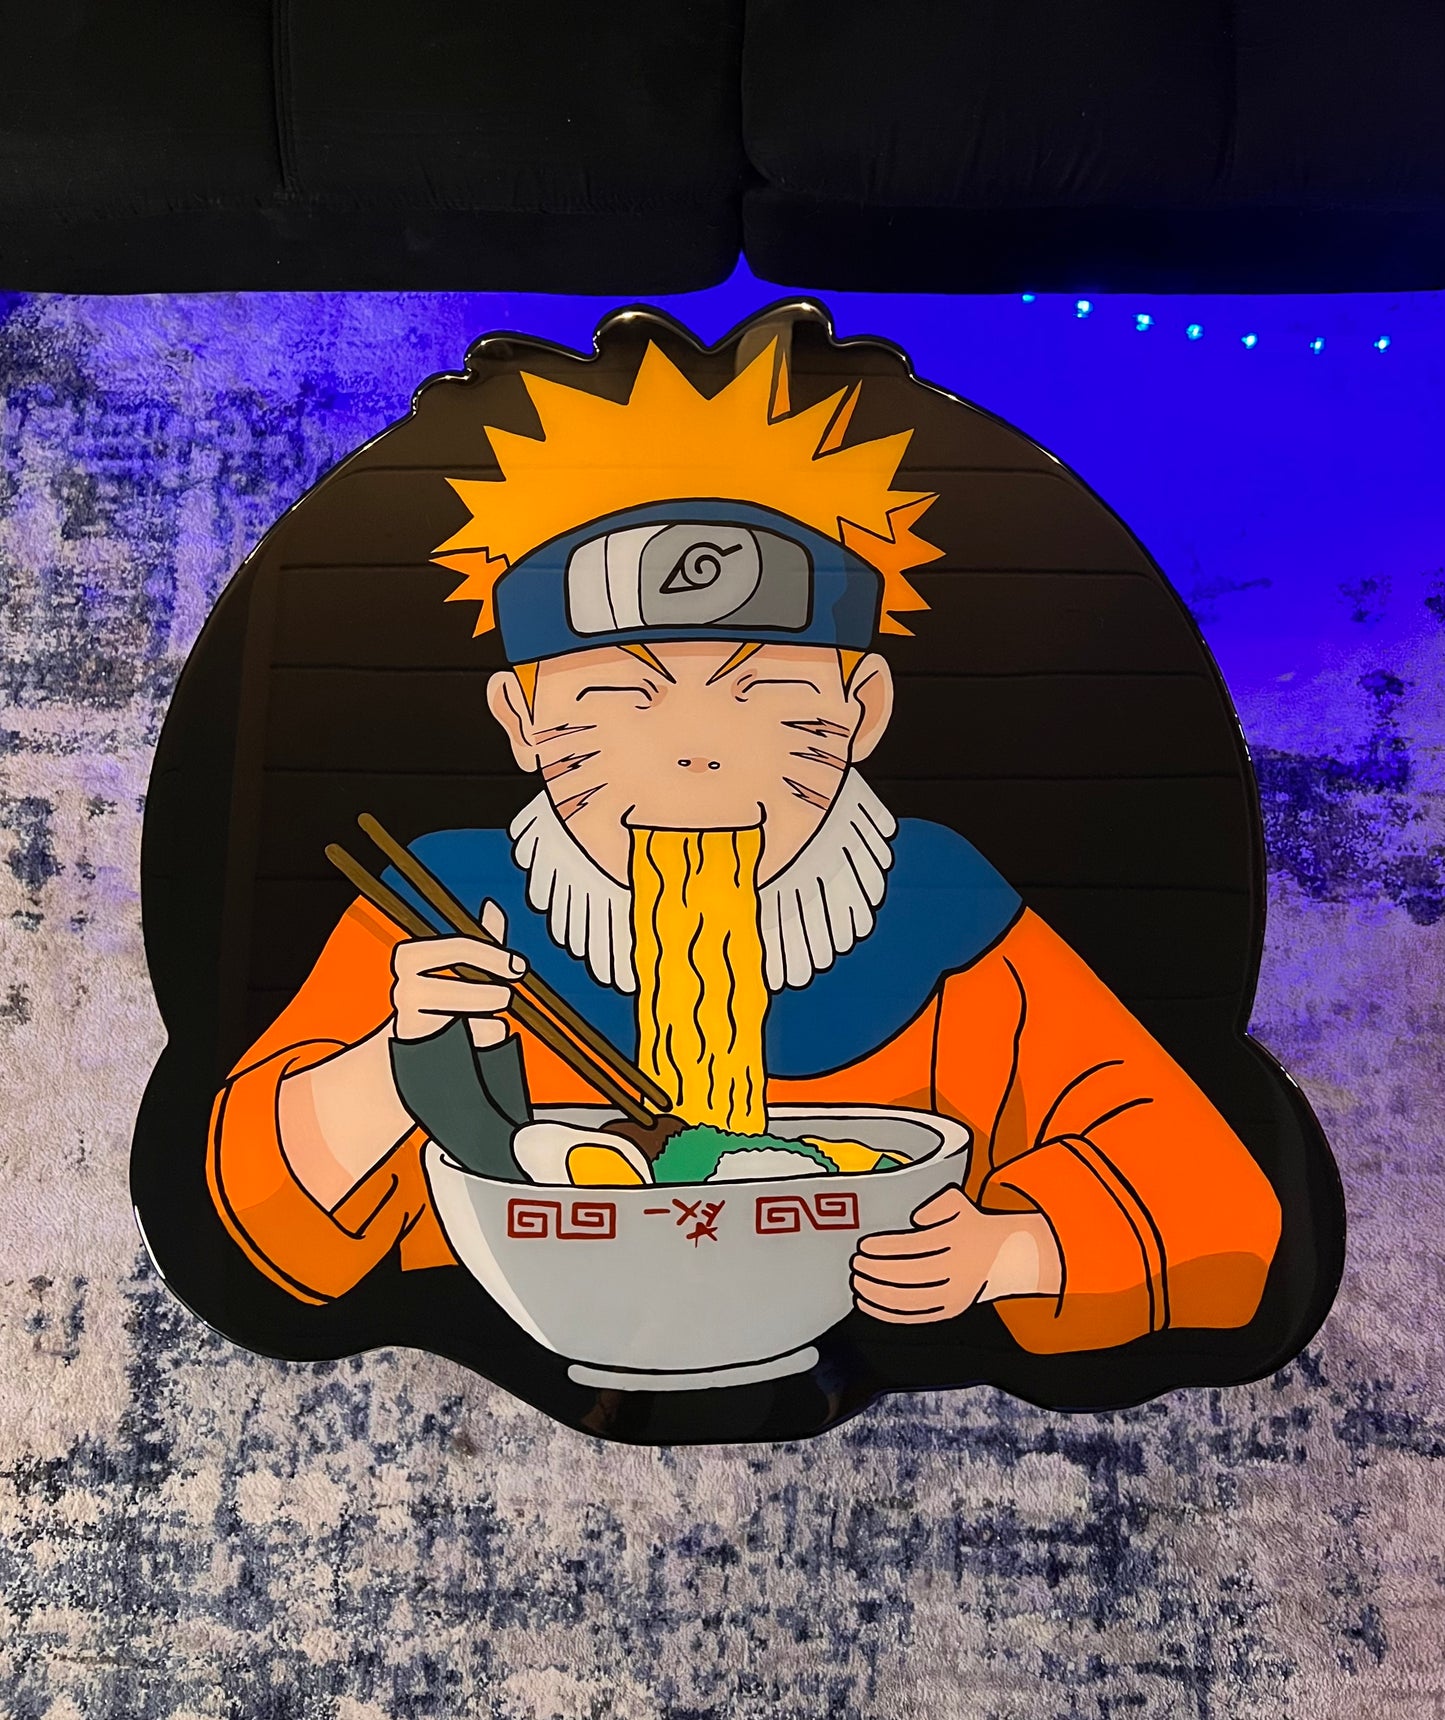 Naruto Coffee Table + 2 Coasters